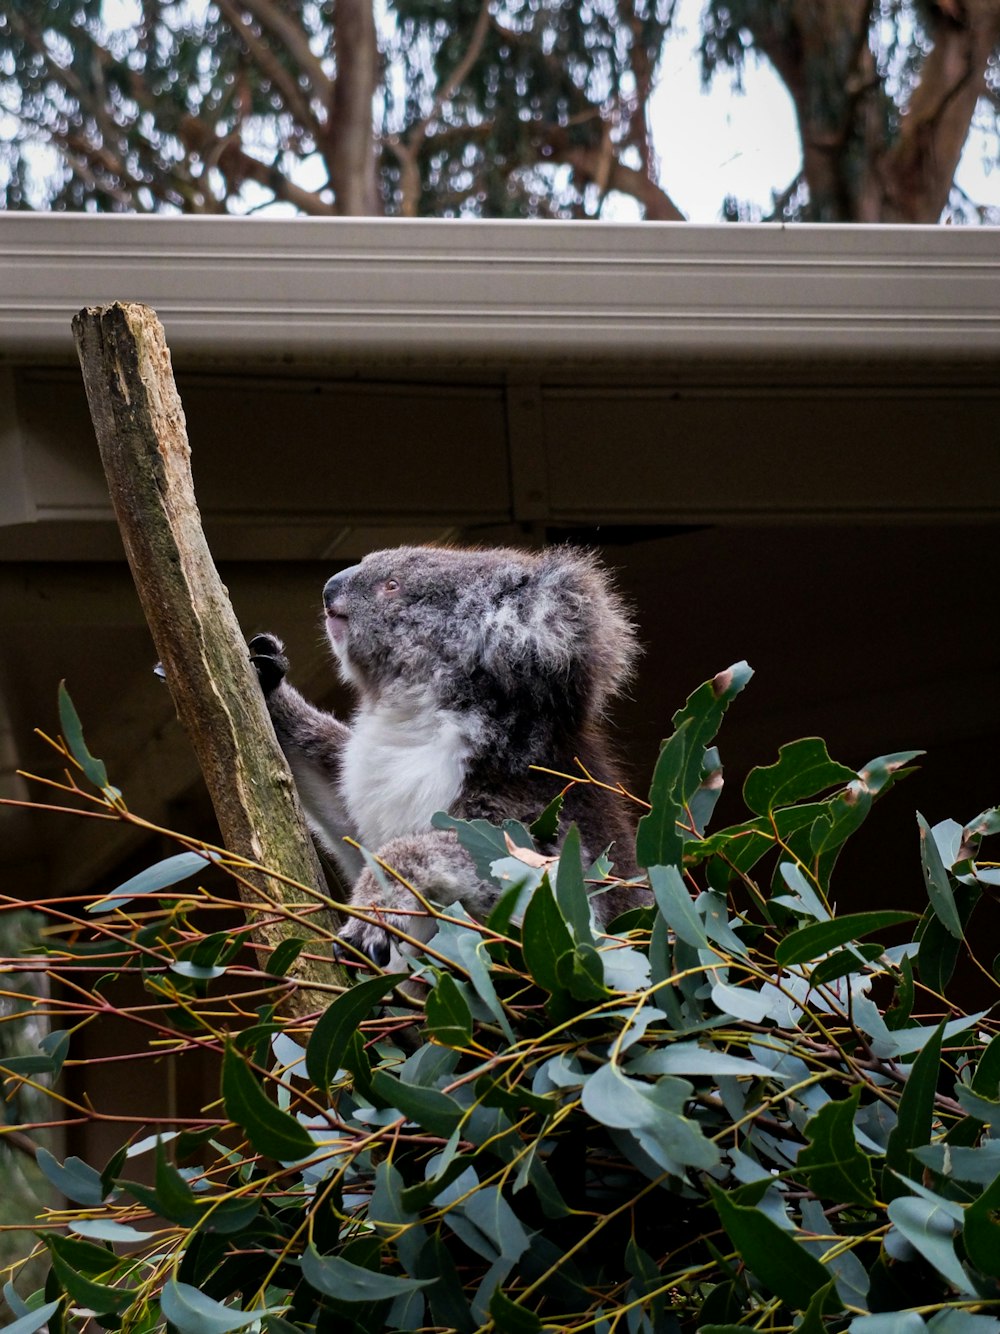 a koala climbing up a tree branch